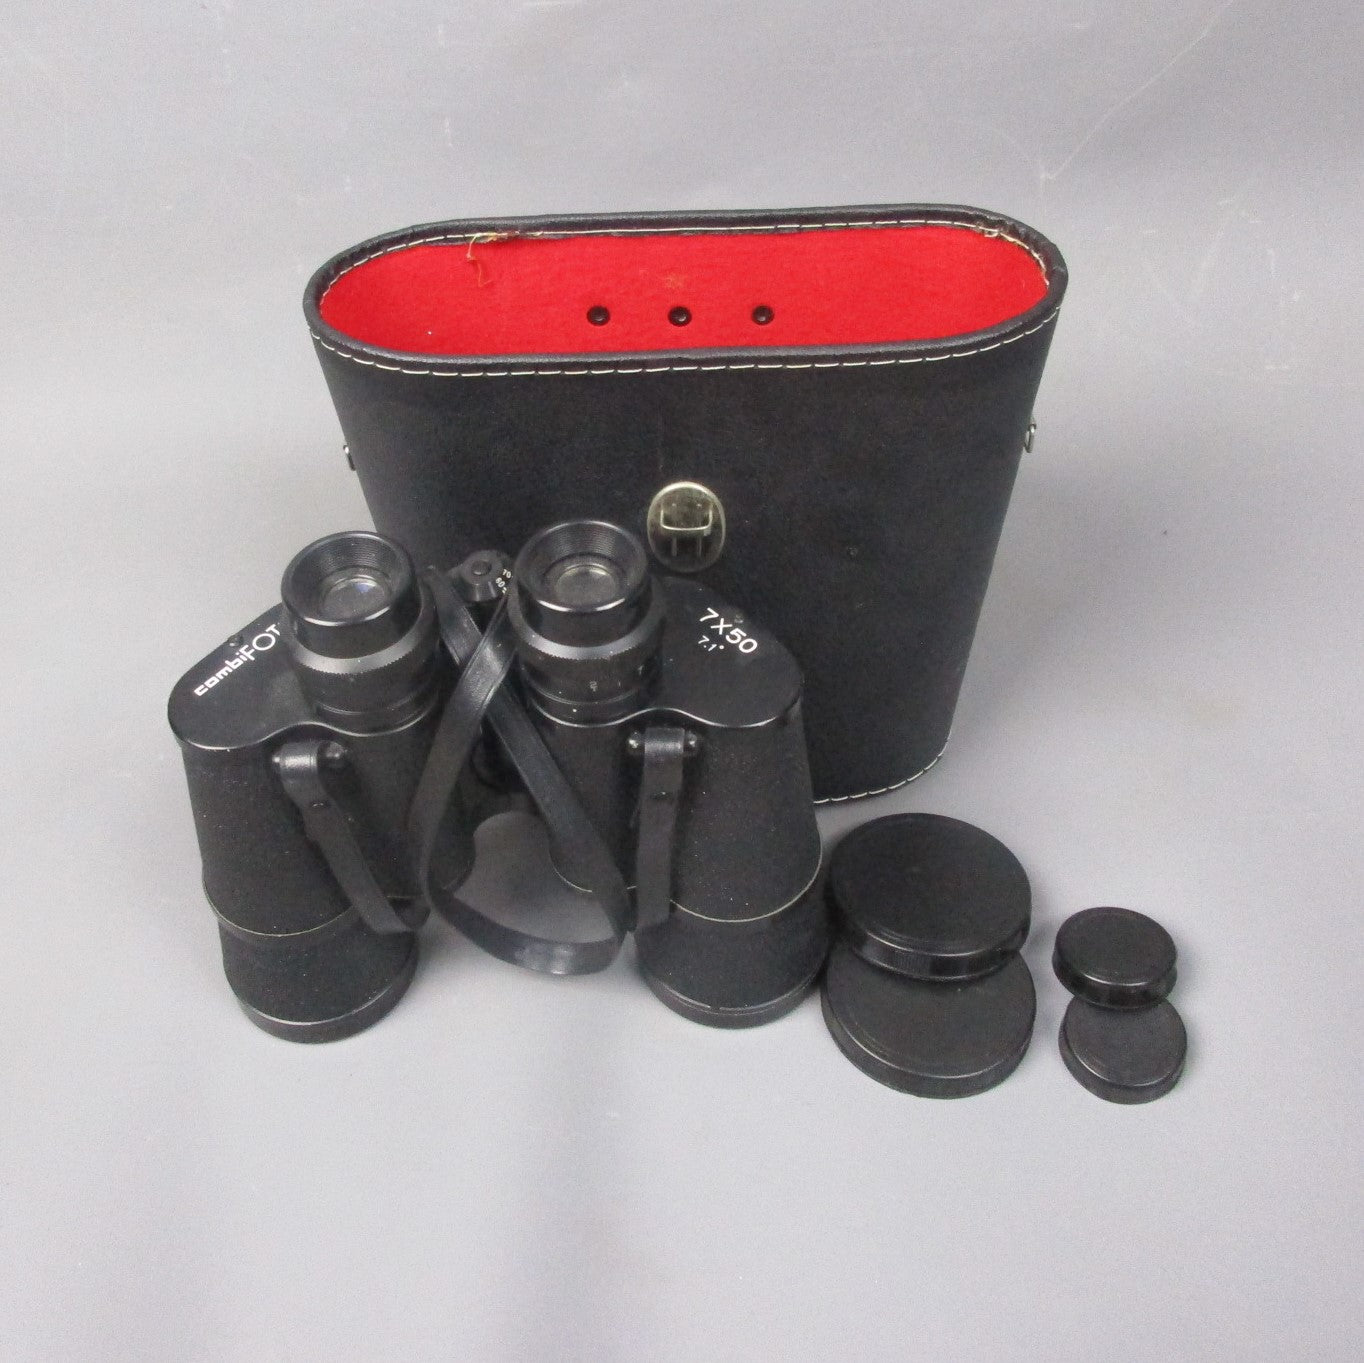 Pair Of Combifoto Binoculars Vintage 20th Century